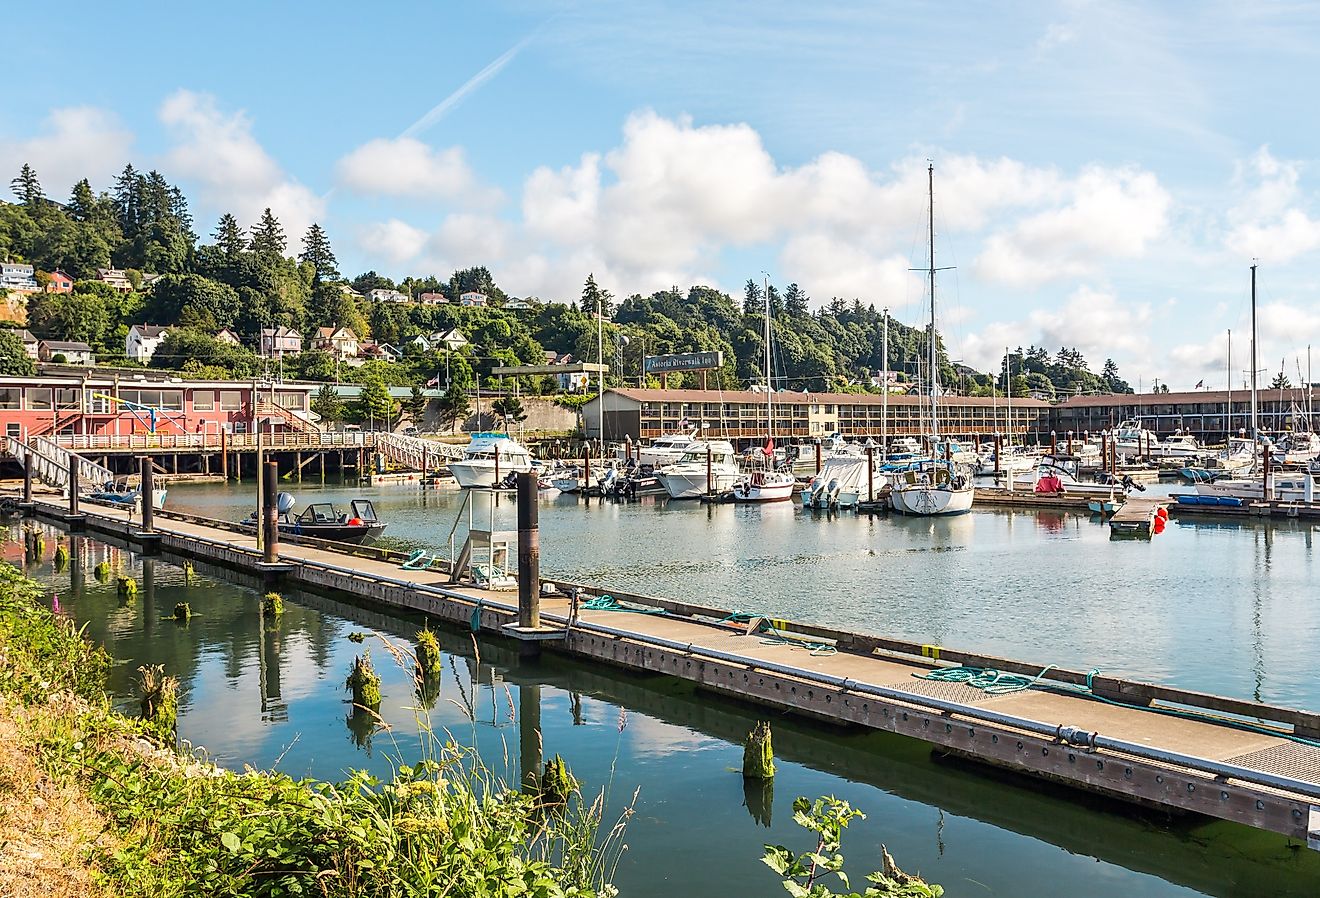 Boat pier near the Riverwalk Inn in Astoria, Oregon. Image credit Victoria Ditkovsky via Shutterstock